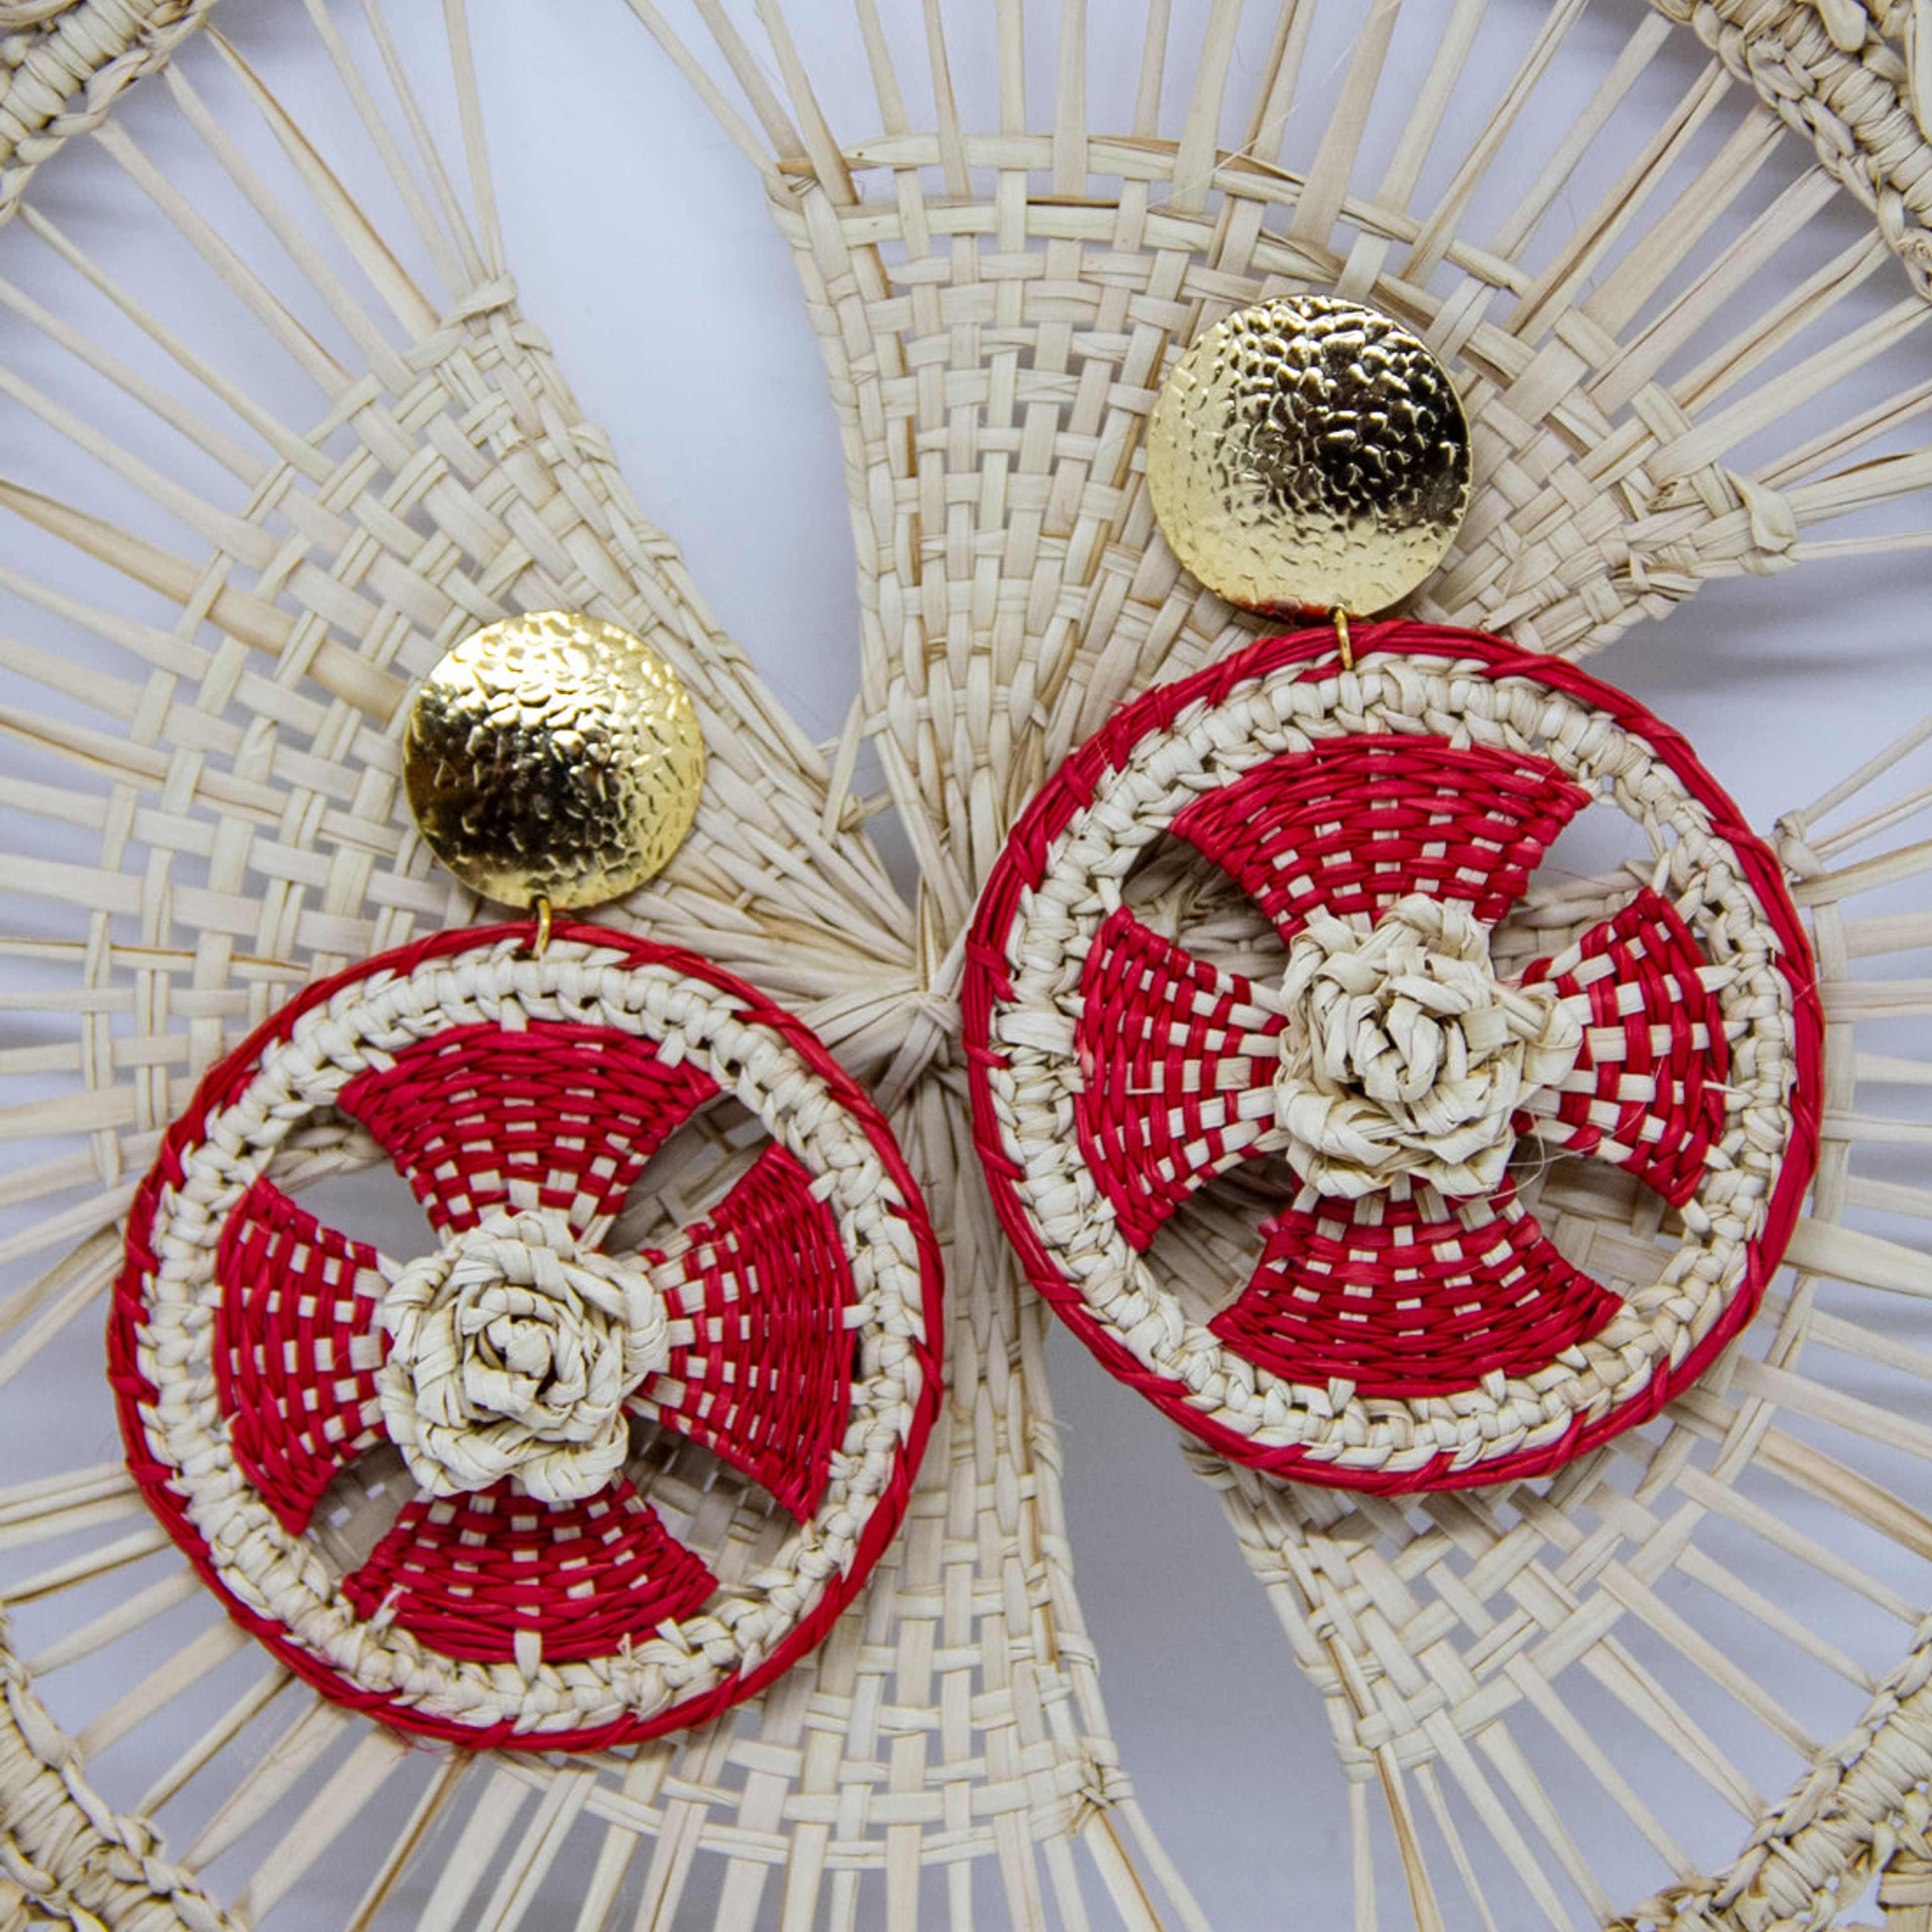 Red Geranium Flower handcrafted earrings